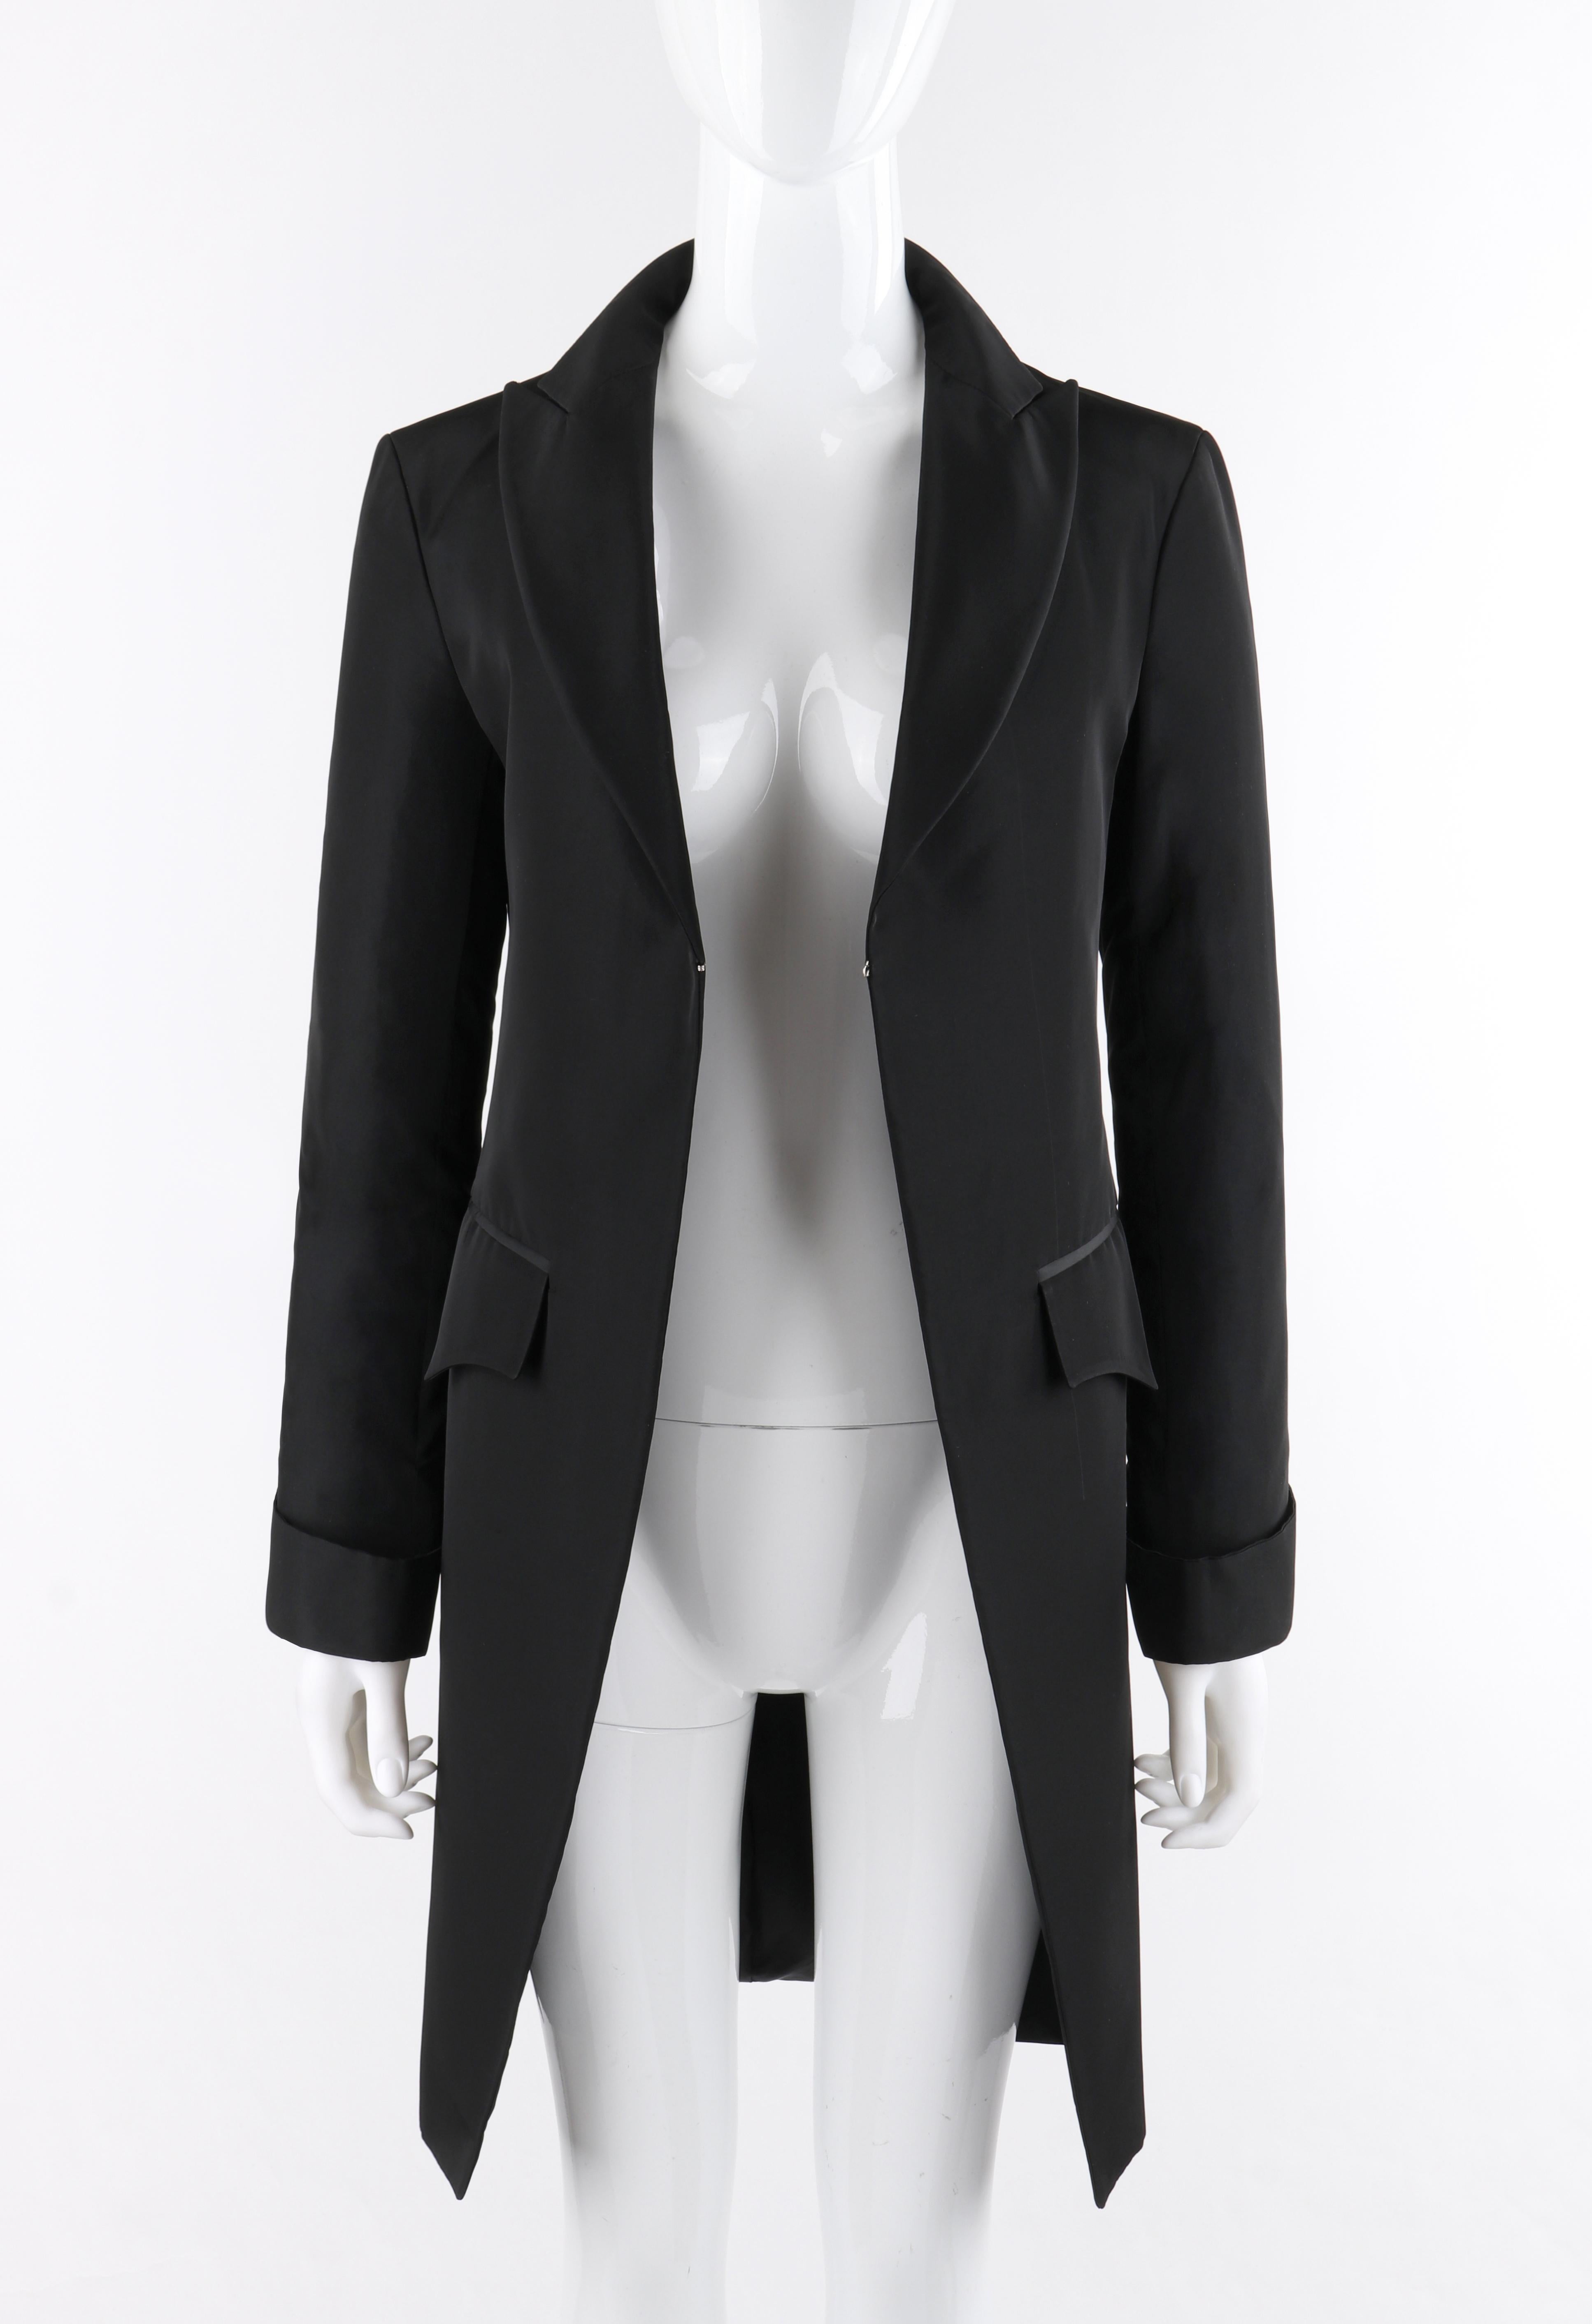 ALEXANDER McQUEEN S/S 1997 “La Poupee” Black Single Closure Cutaway Dress Jacket

Brand / Manufacturer: Alexander McQueen
Collection: S/S 1997 “La Poupee”- Runway look #19, #70
Designer: Alexander McQueen 
Style: Cutaway style jacket
Color(s):